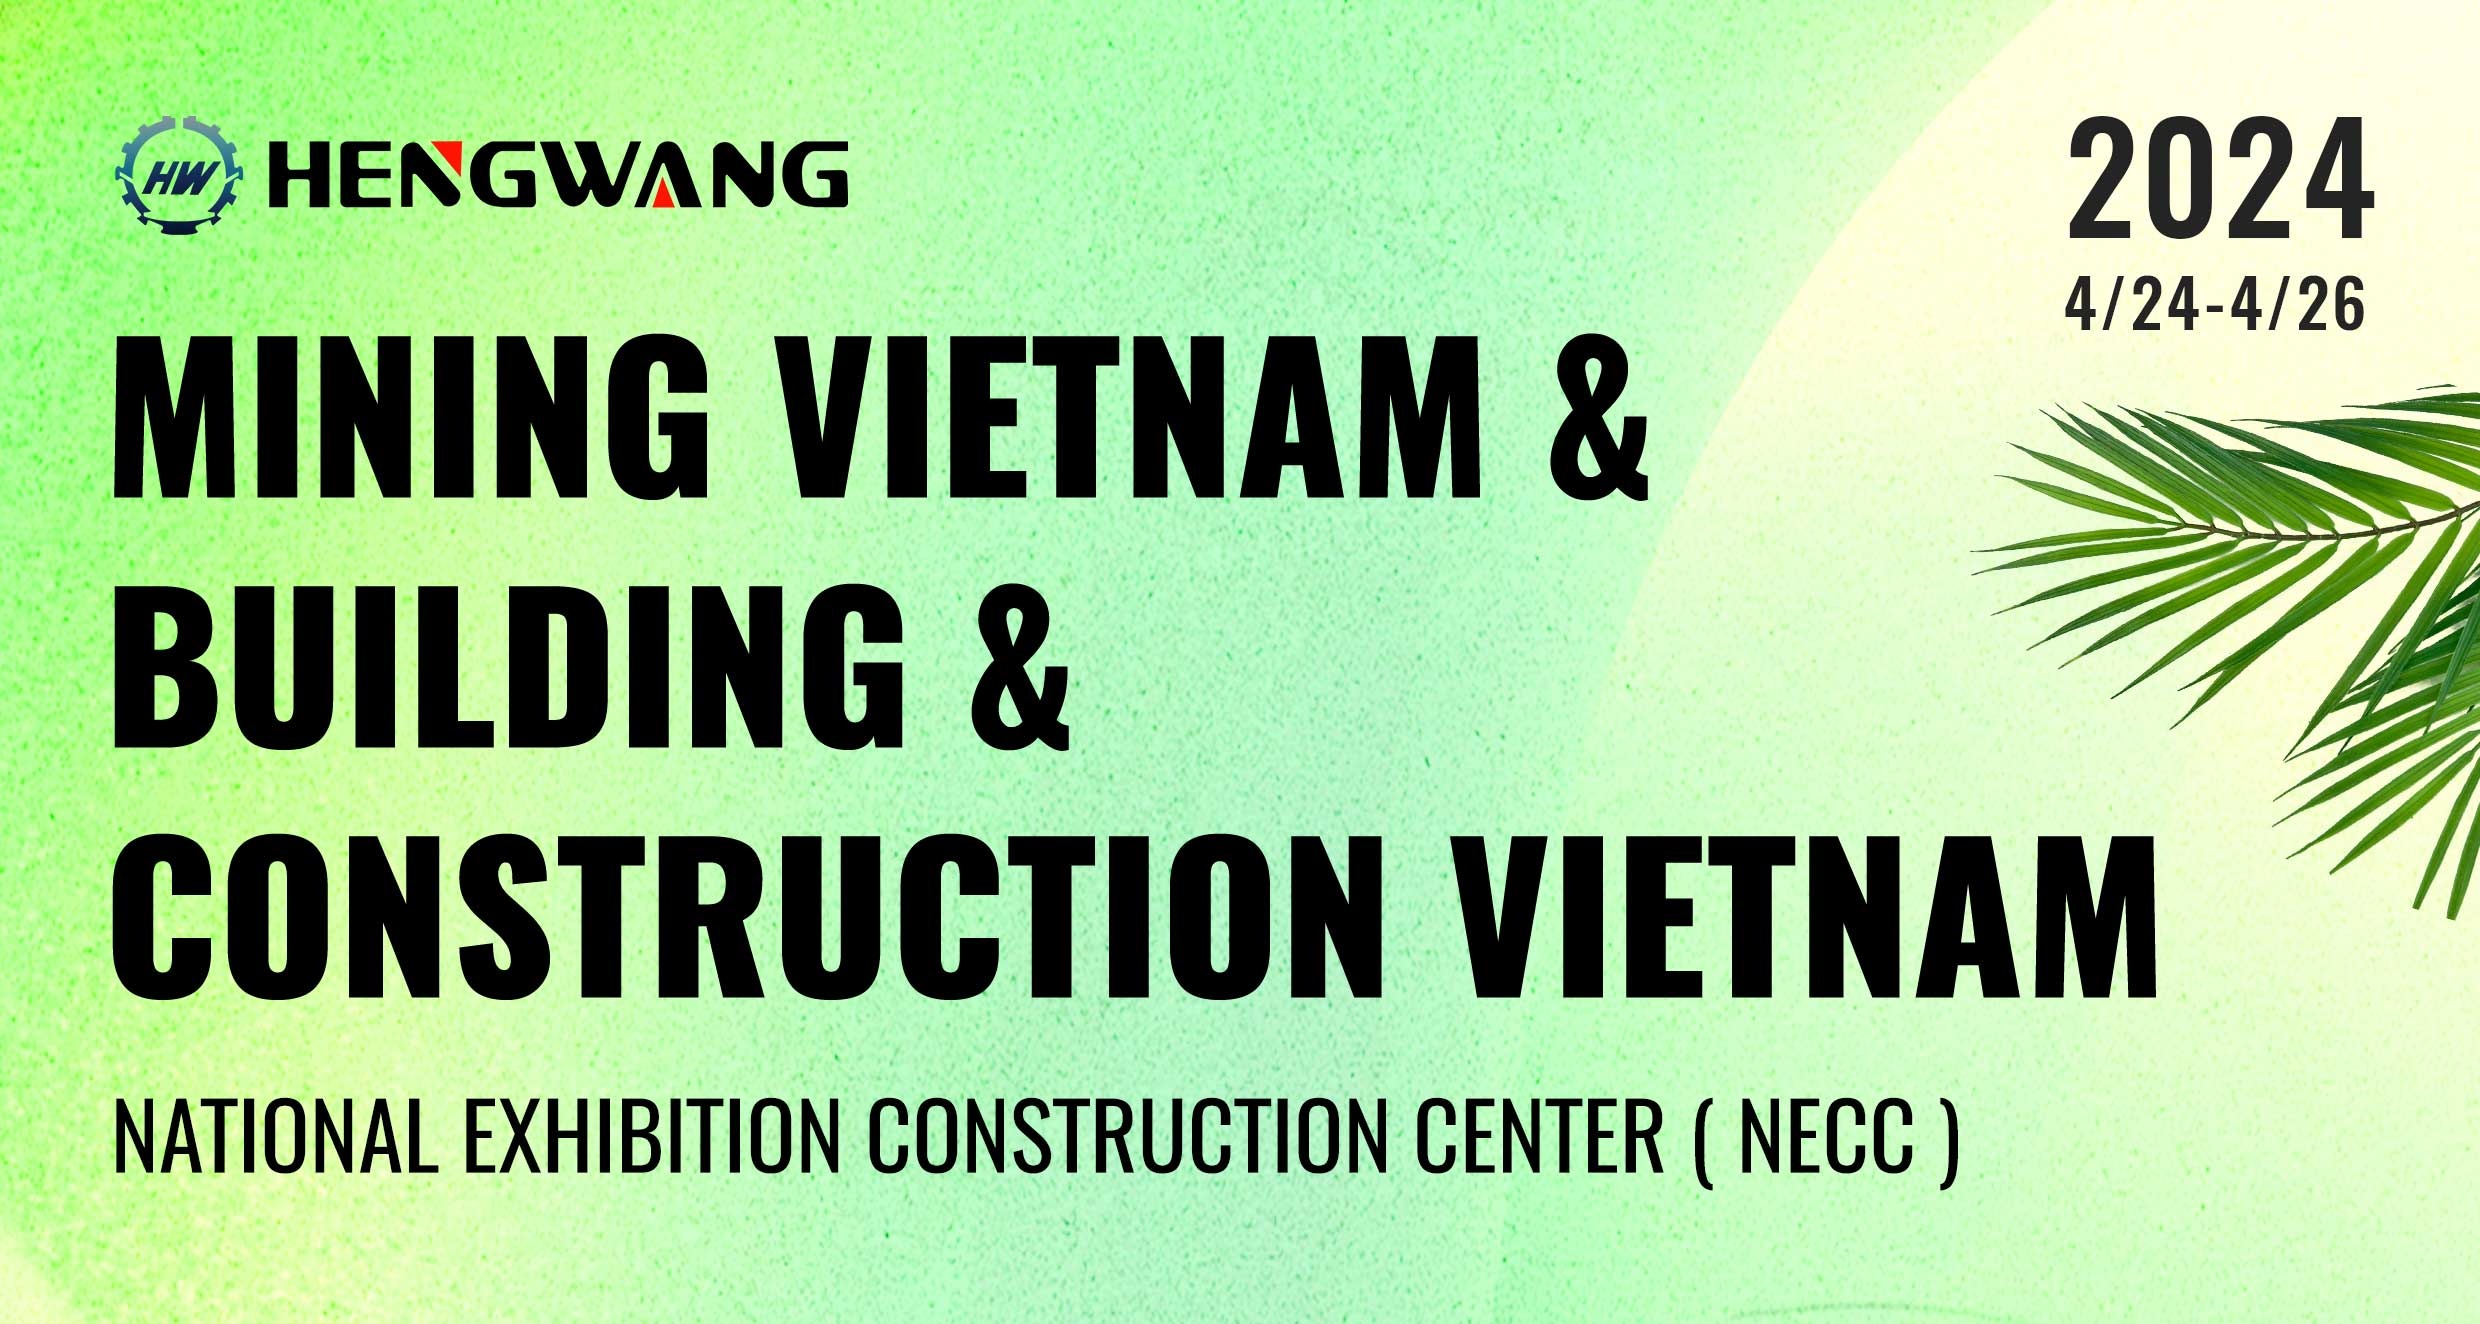 Hengwang Group’s Vietnam Exhibition Is In Full Swing